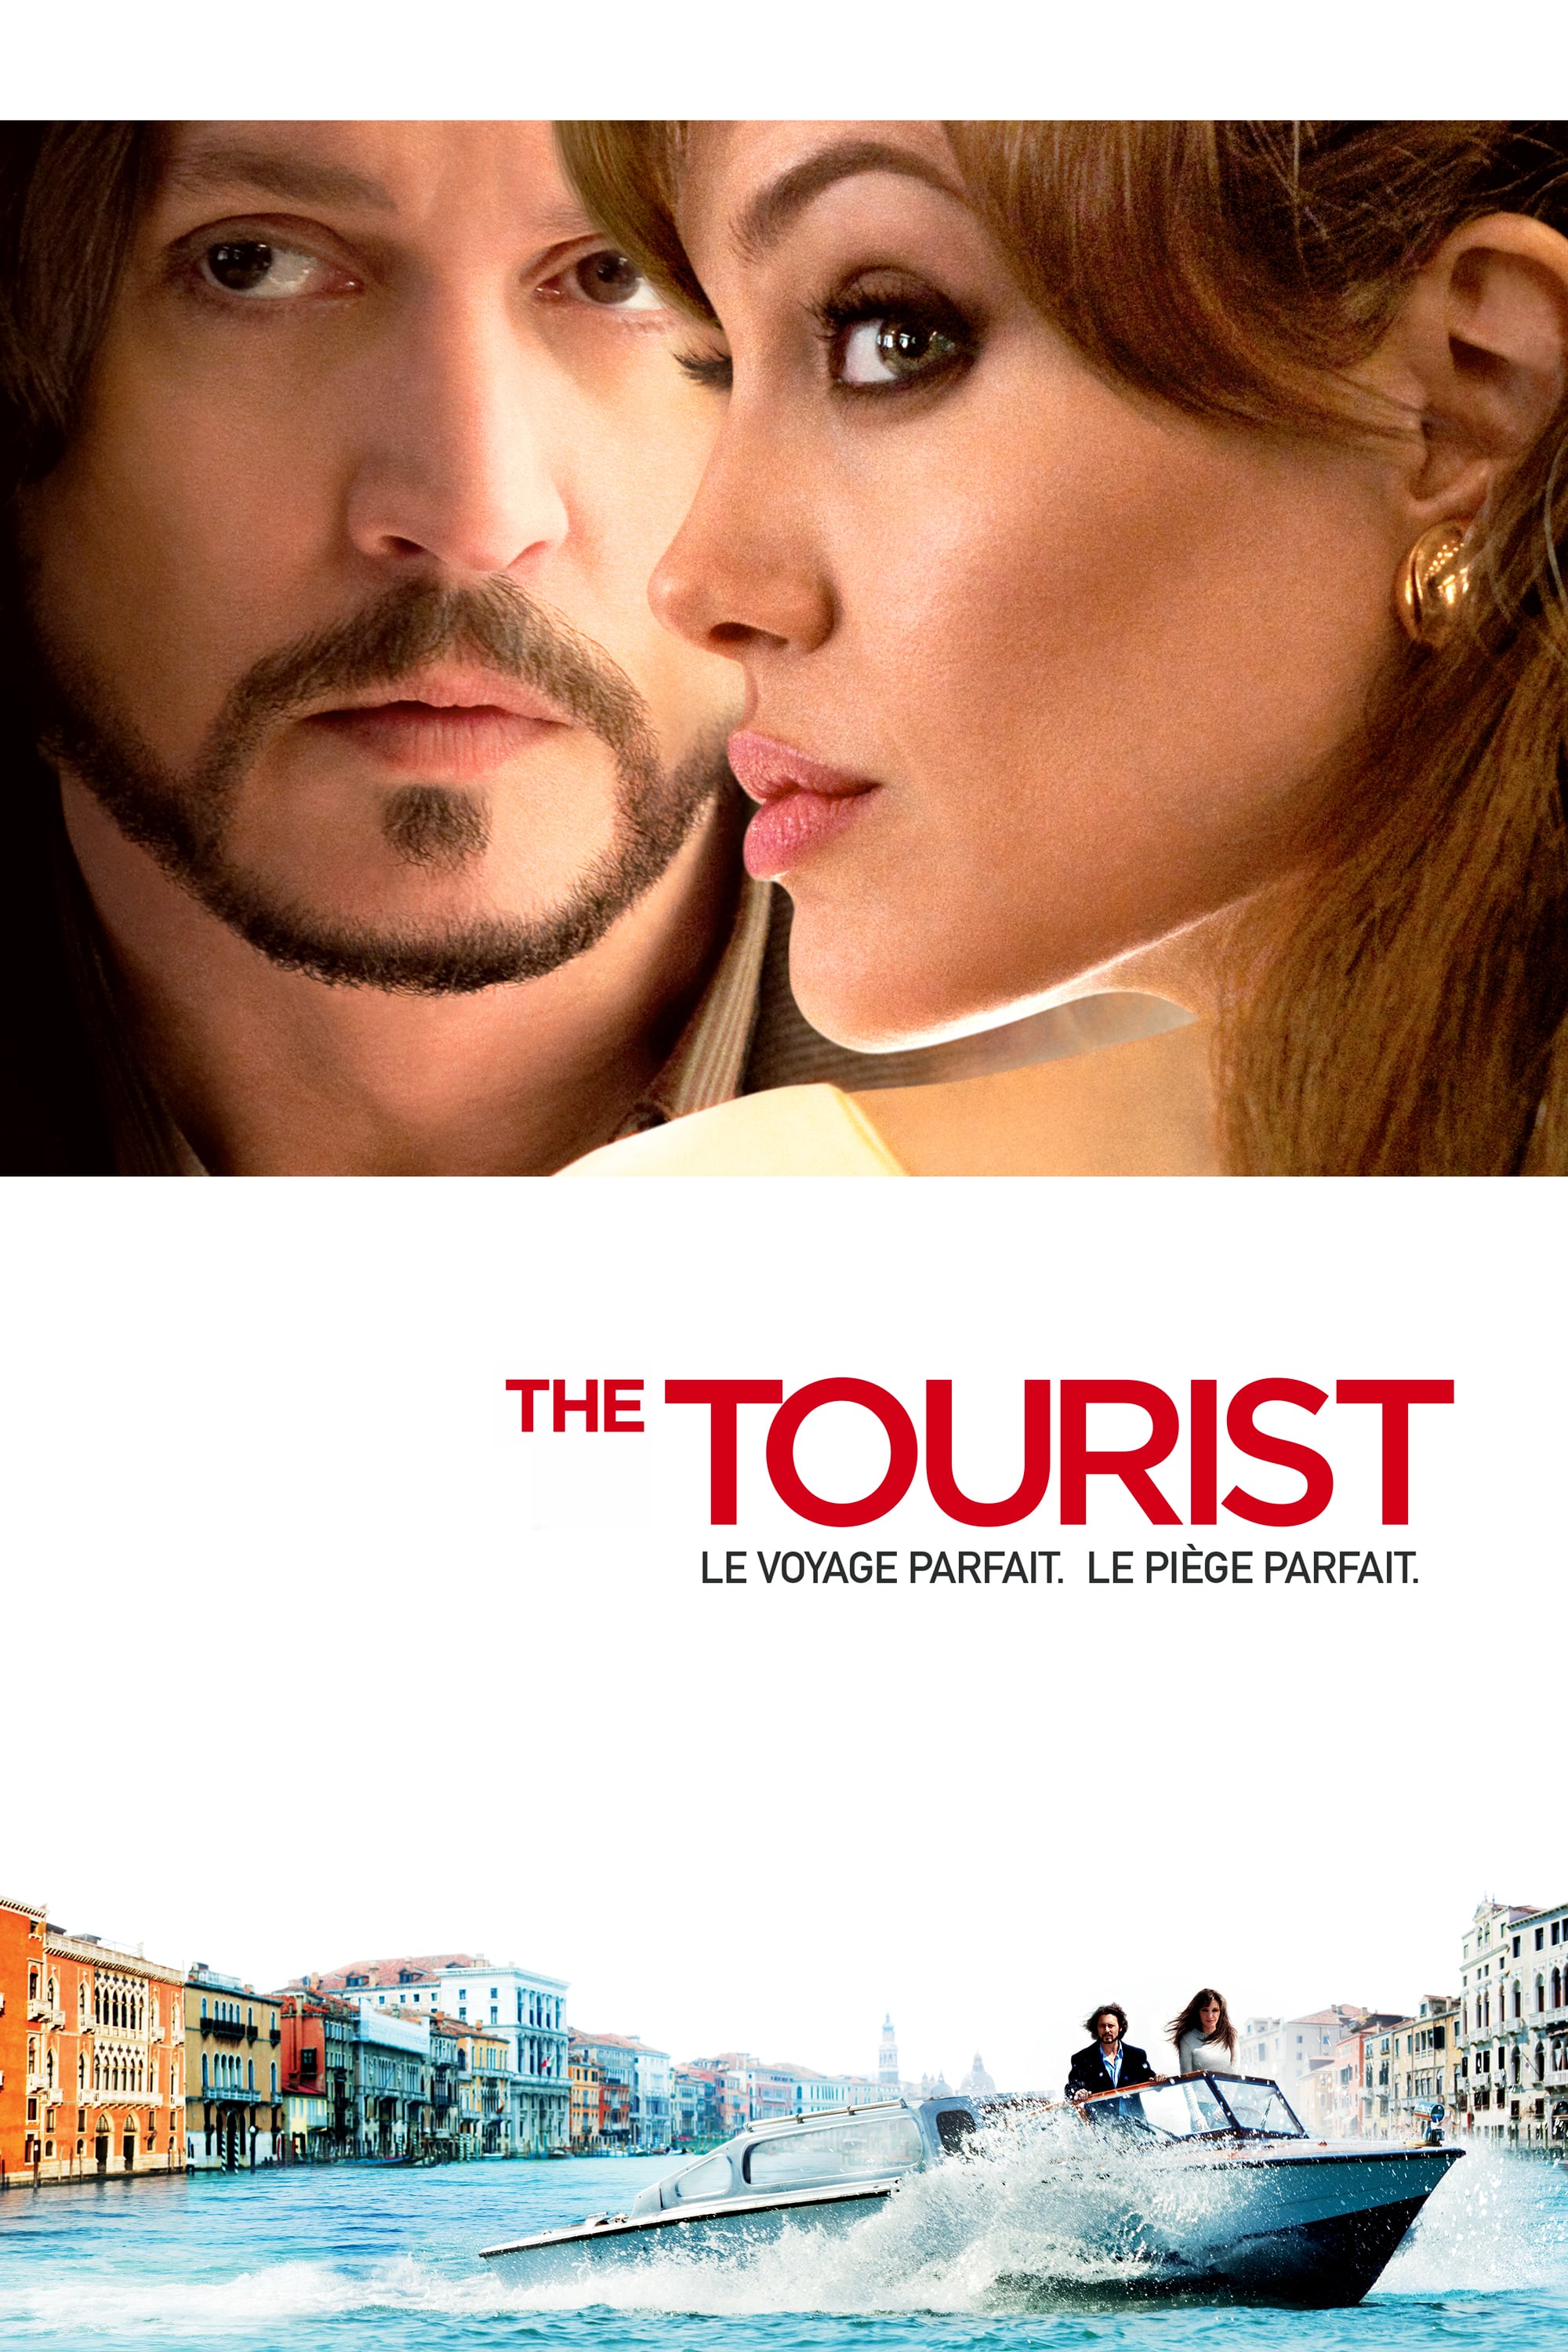 the tourist movie opening scene